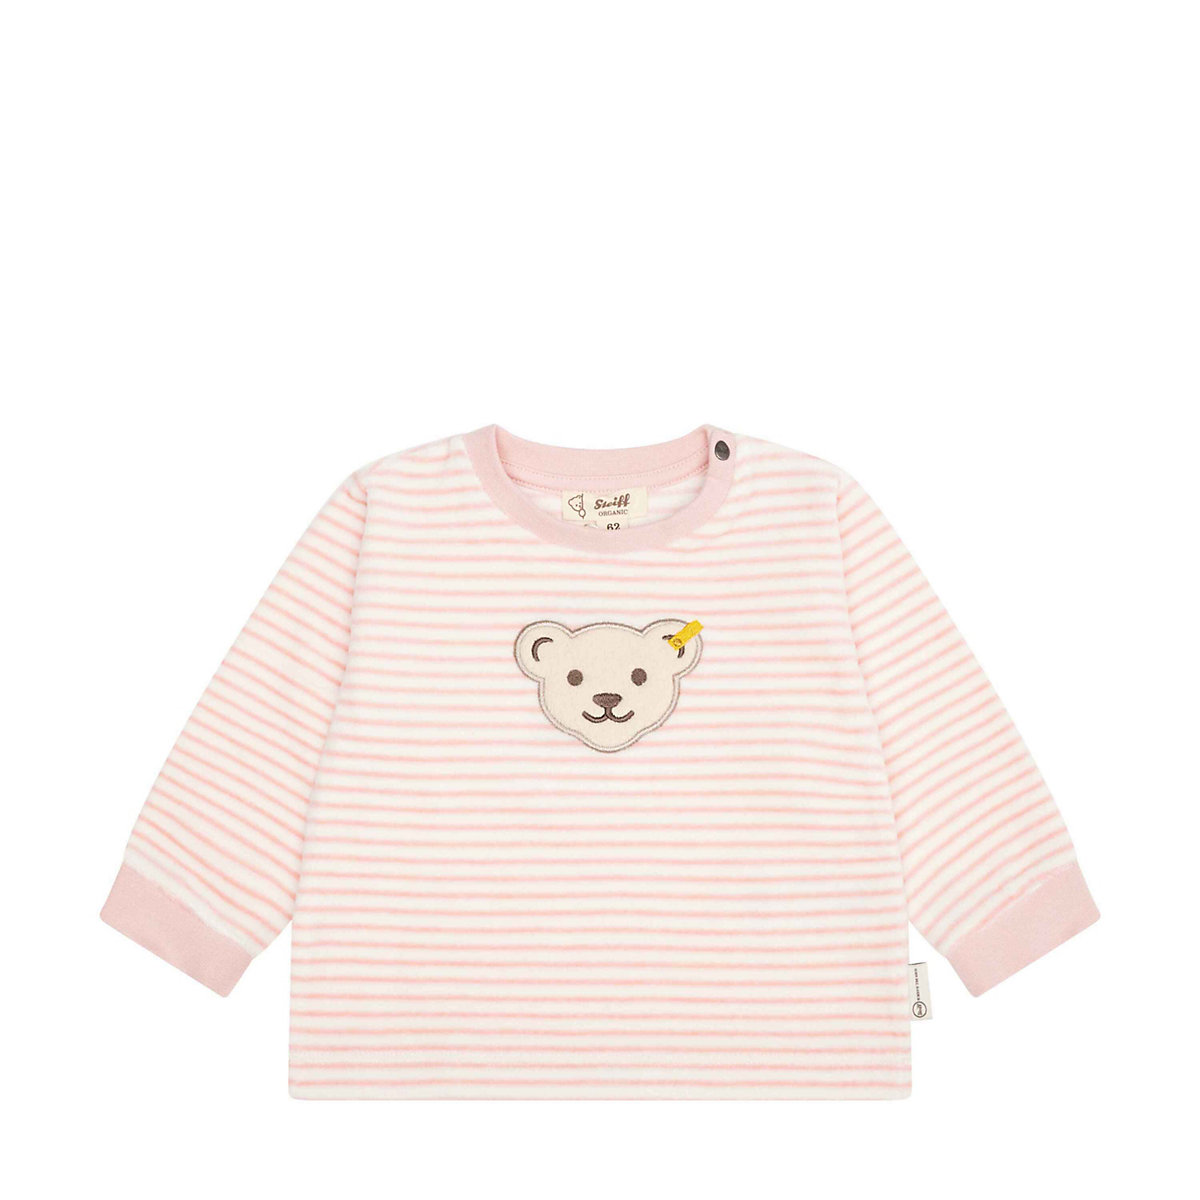 Steiff Sweatshirt Baby Wellness lässig mit Teddykopf Sweatshirts rosa